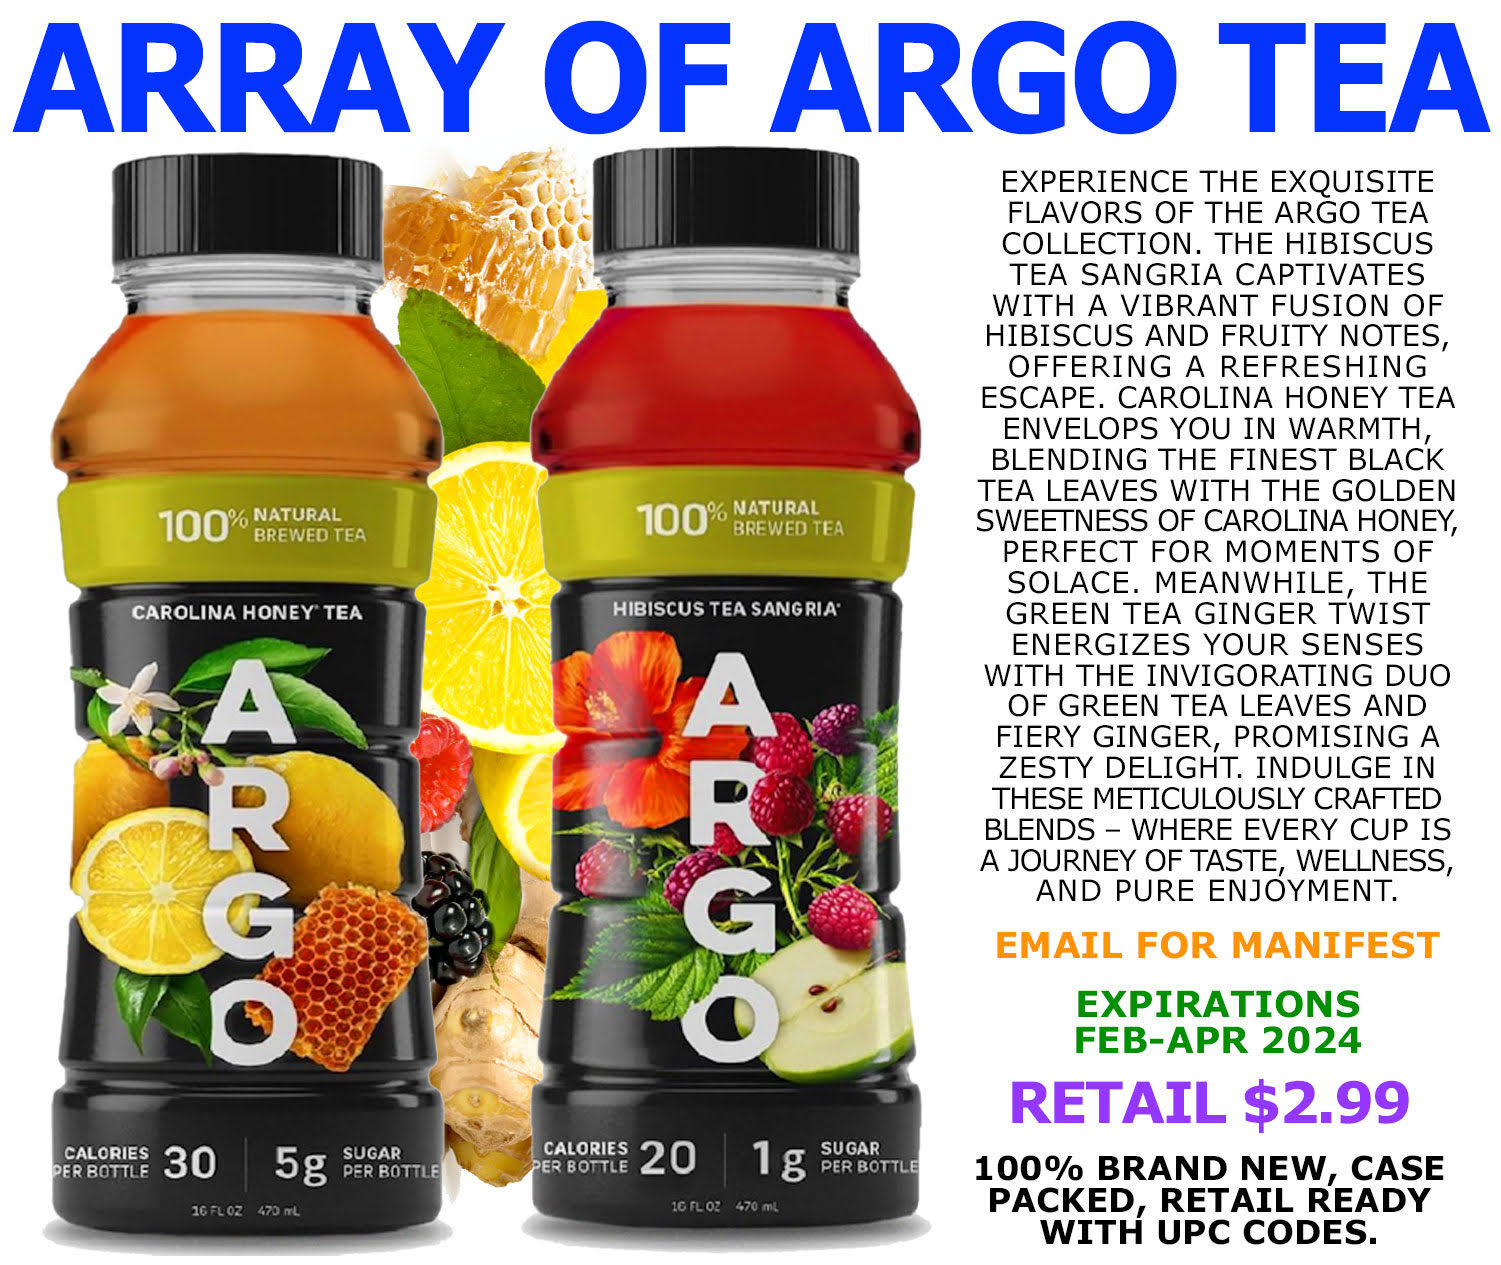 386,412   bottles of Argo tea